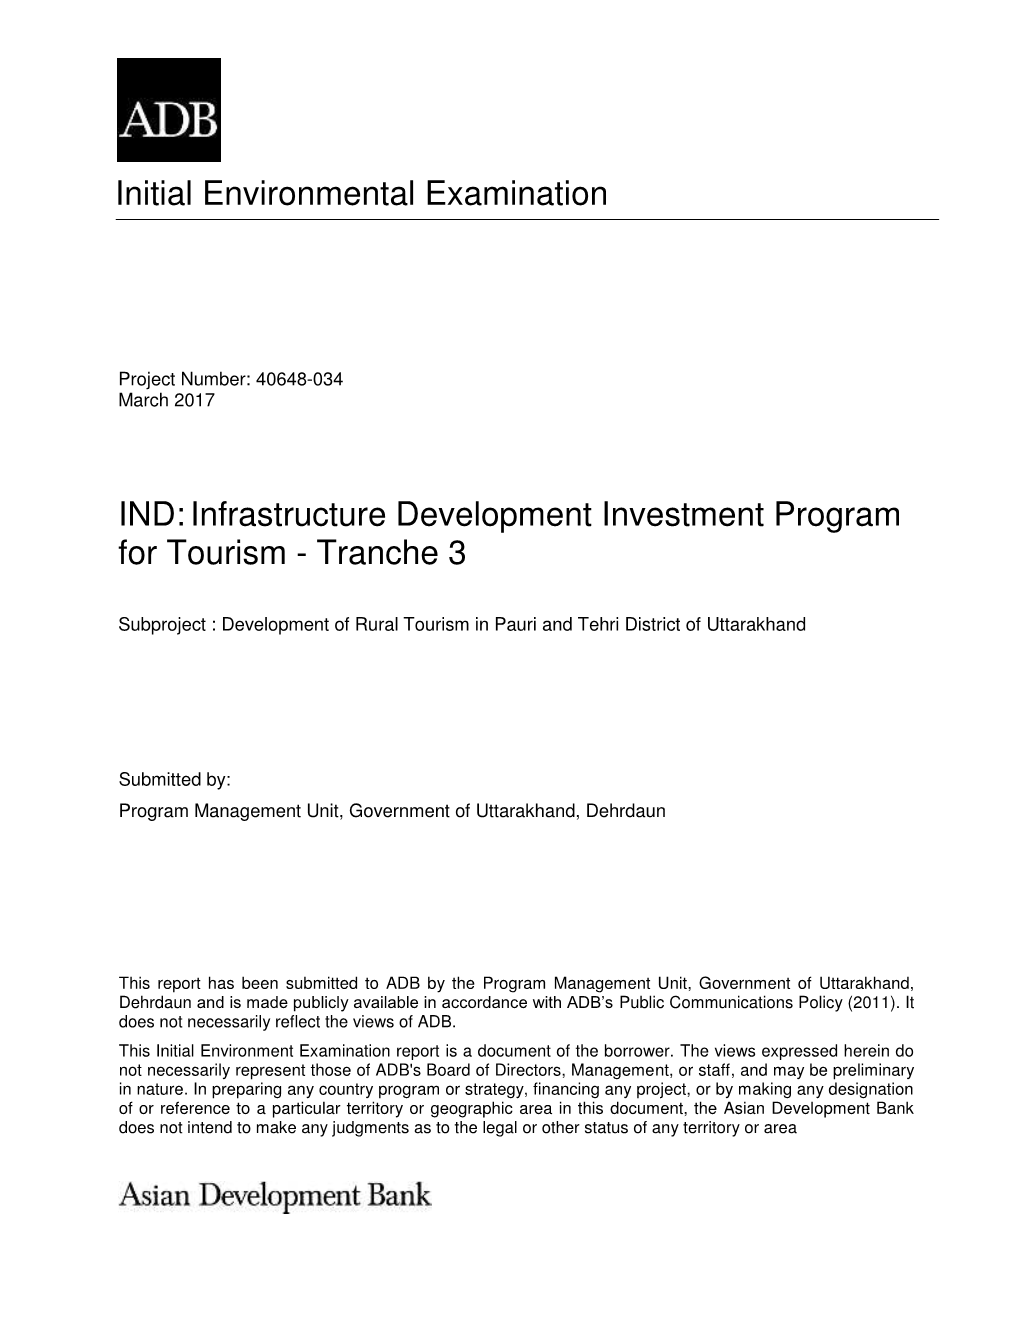 Initial Environmental Examination IND